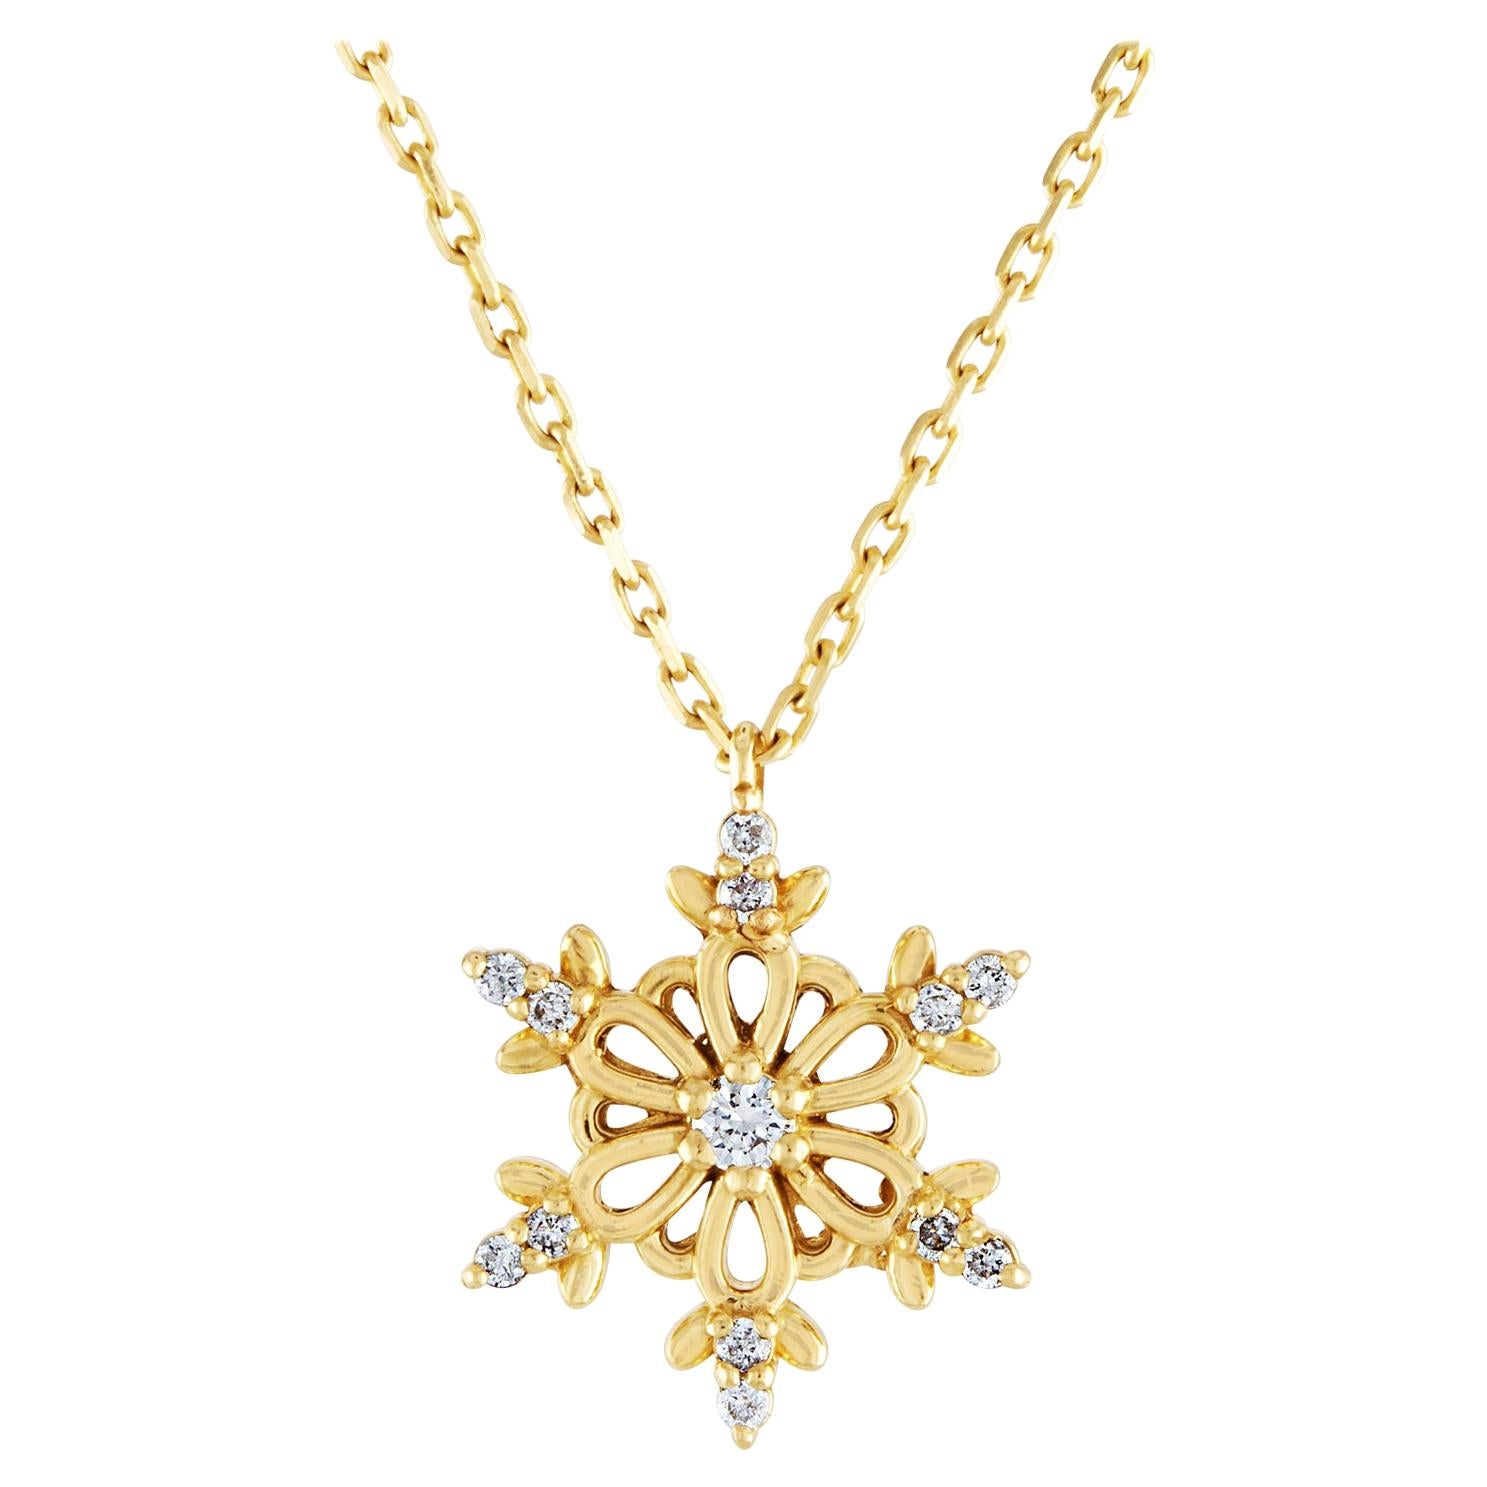 0.15 Carats Diamond & Yellow Gold Snowflake Pendant Chain Necklace